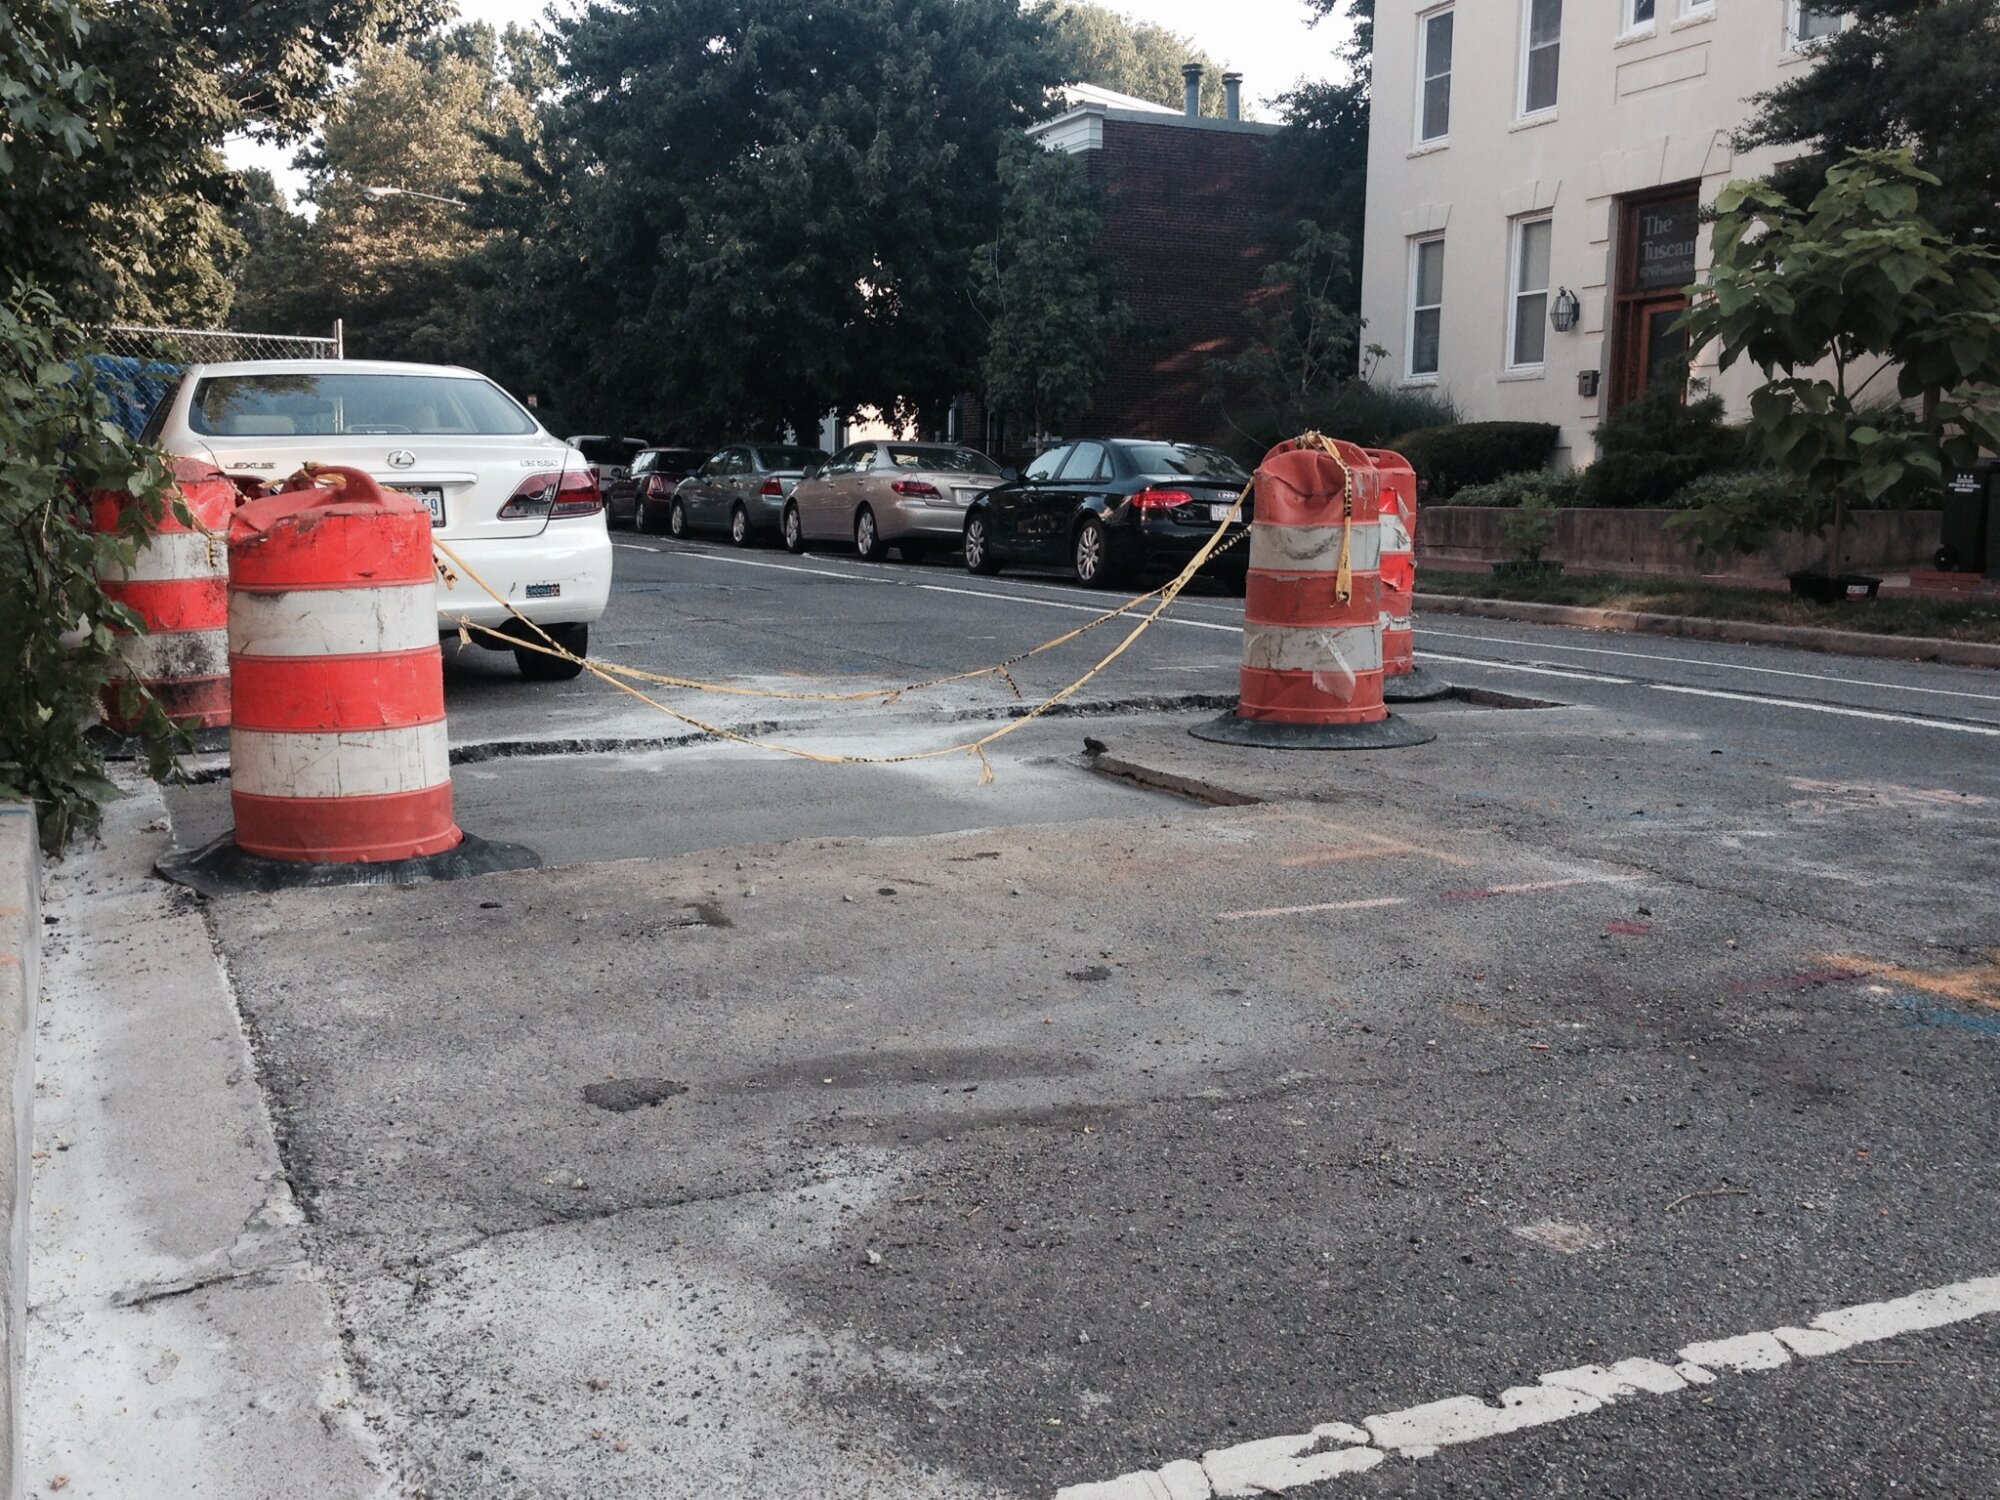 Council to examine D.C.’s pothole efforts